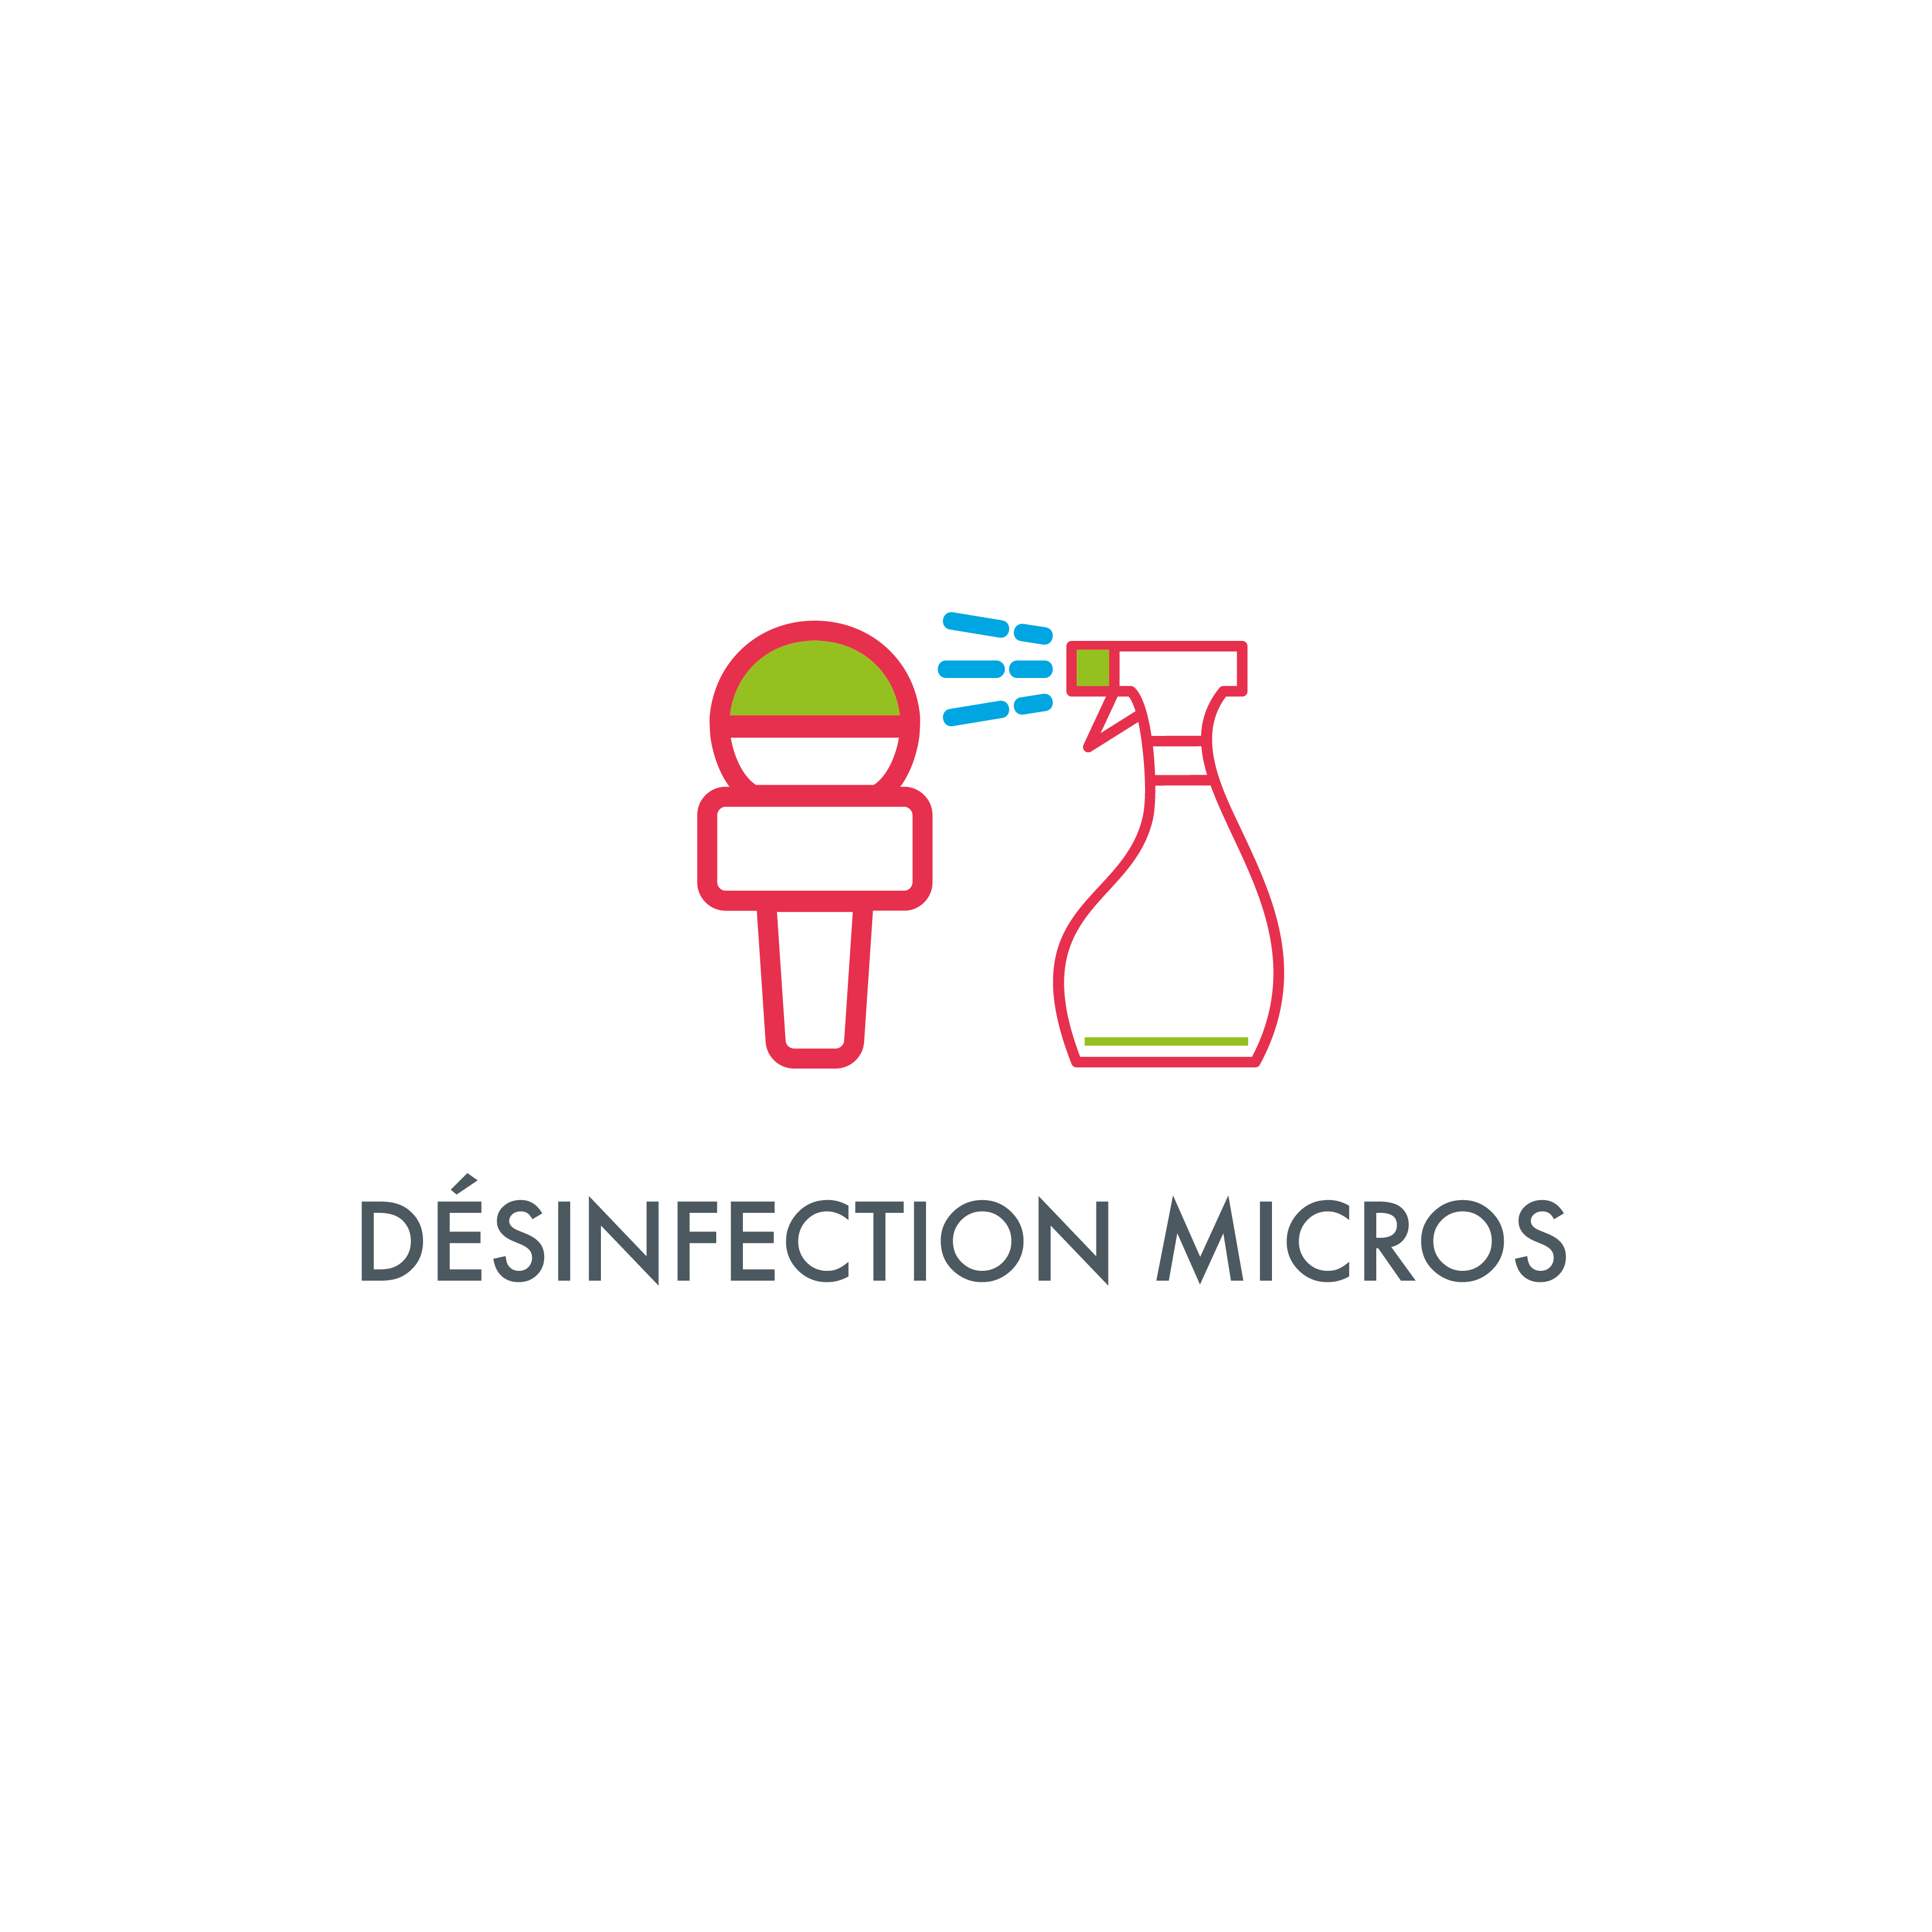 Désinfection micros